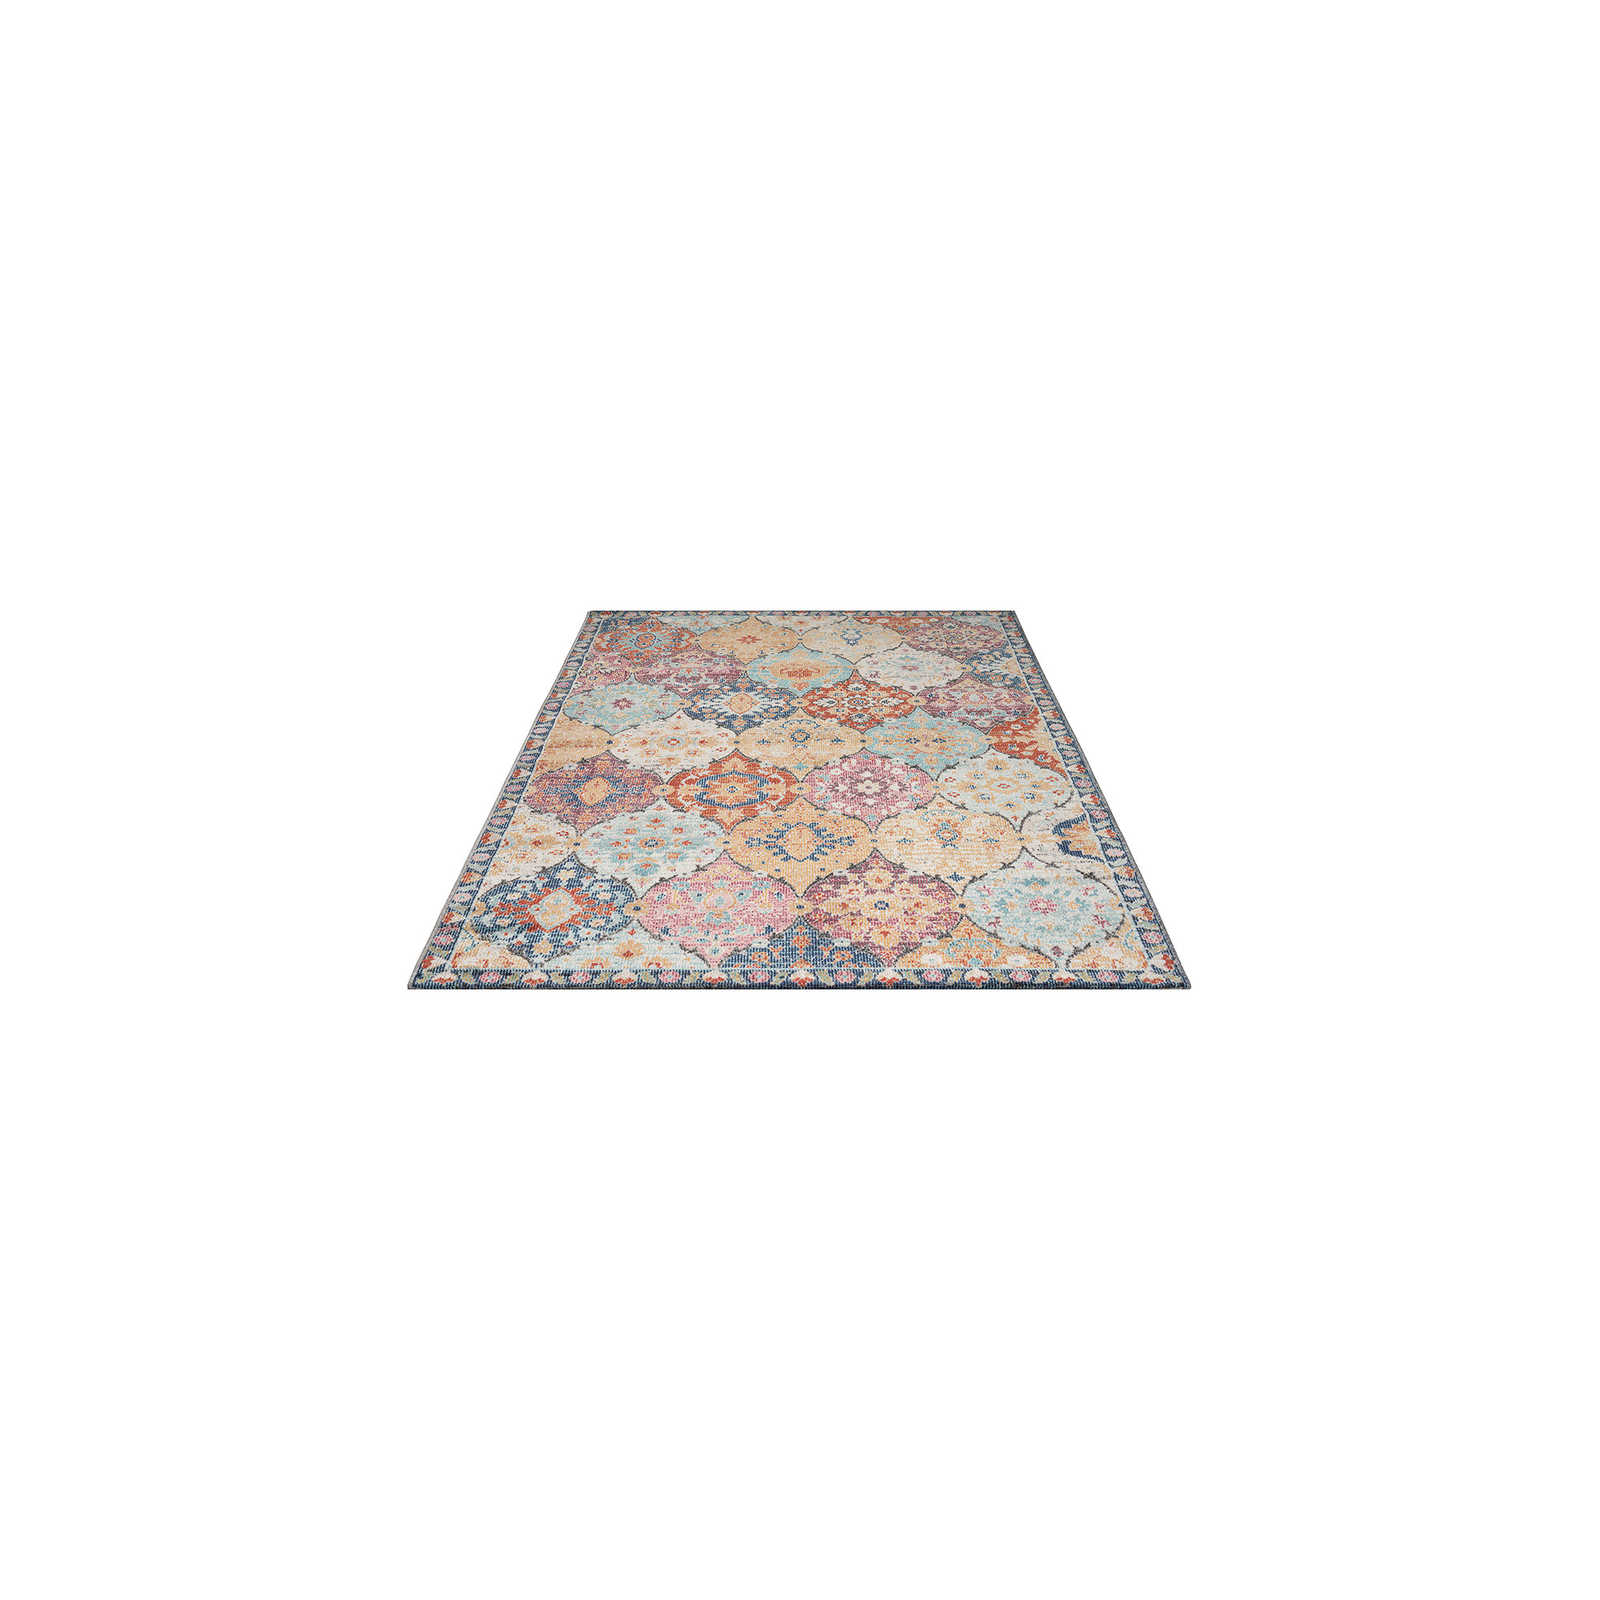 Bunter Outdoor Teppich aus Flachgewebe – 170 x 120 cm
